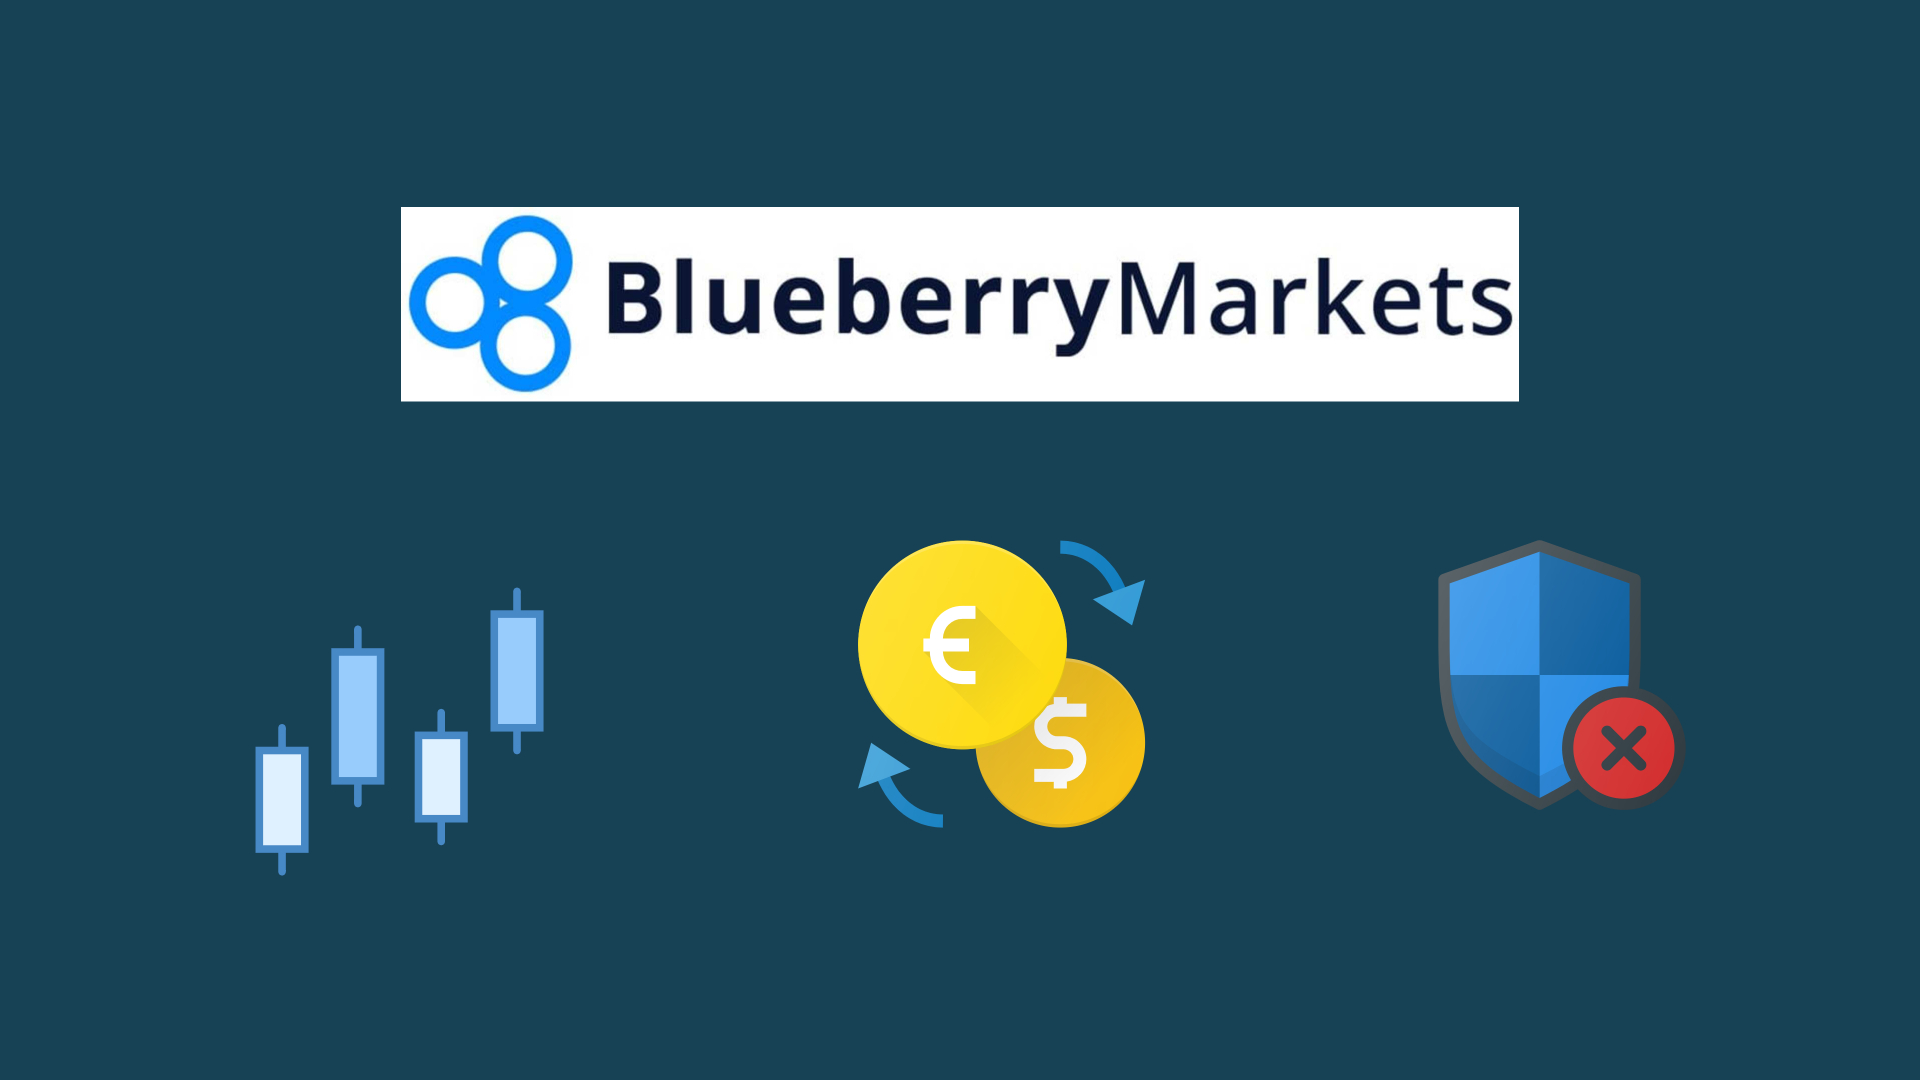 Blueberry markets demo account